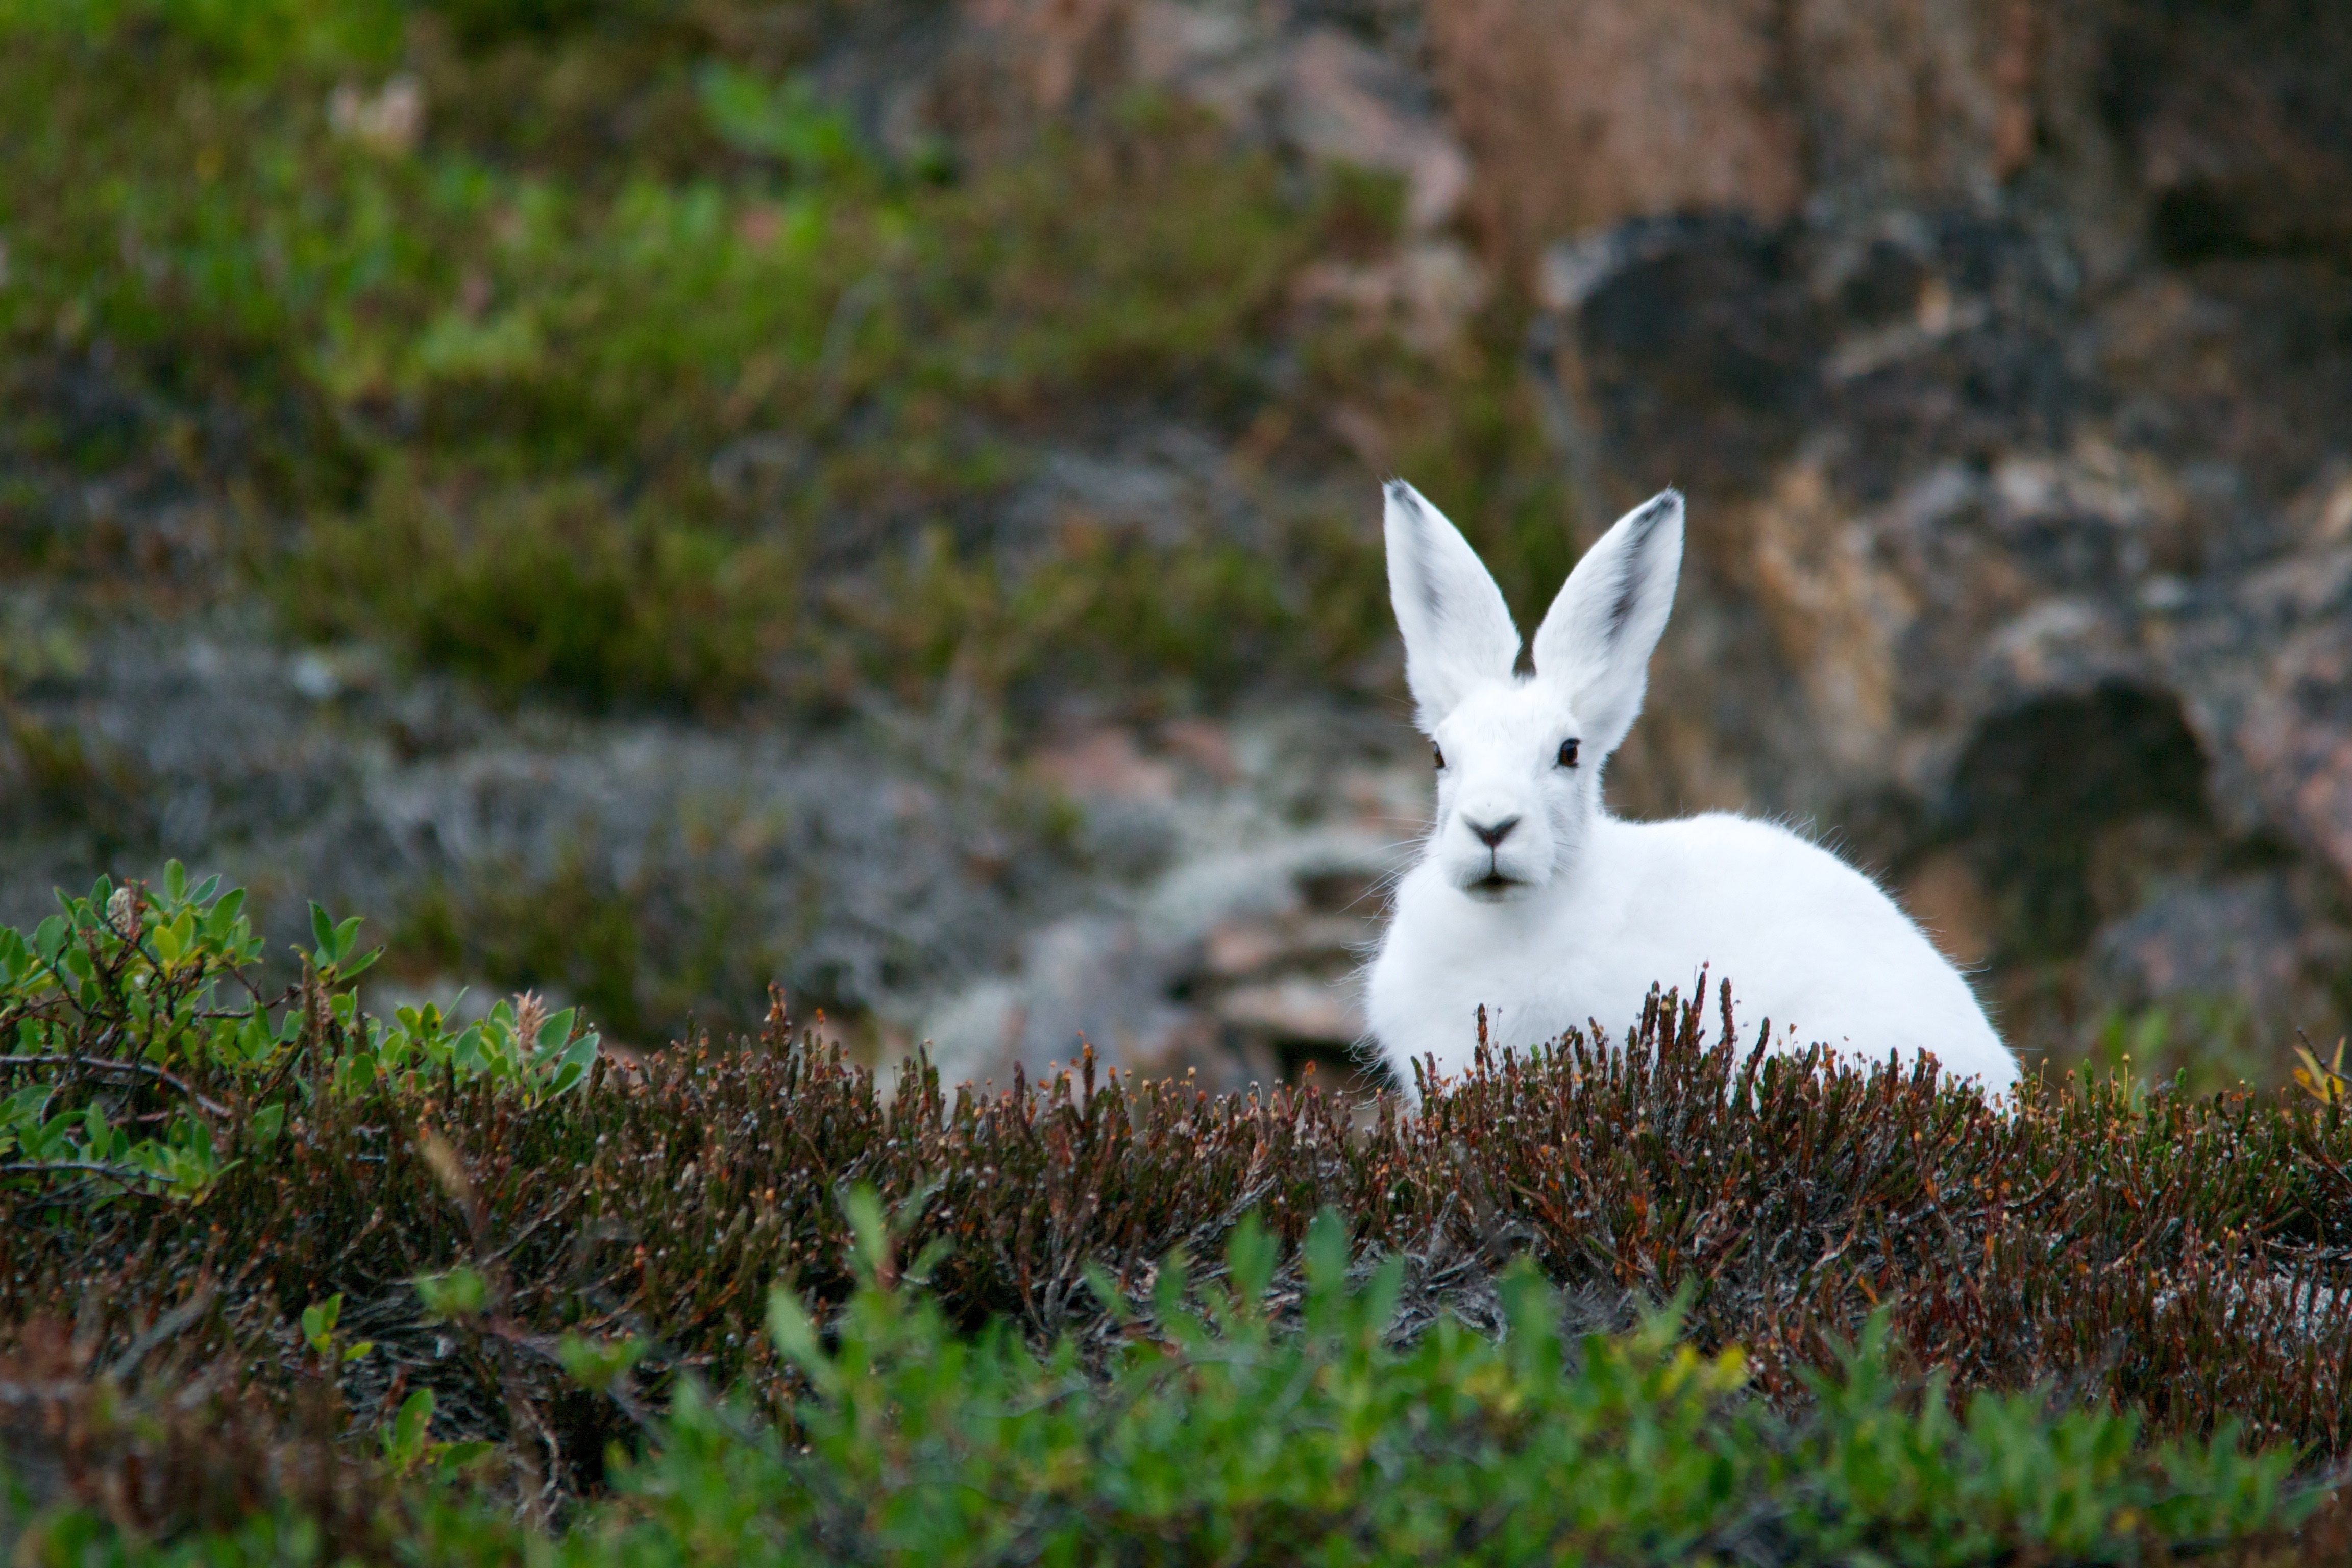 A white rabbit on green grass